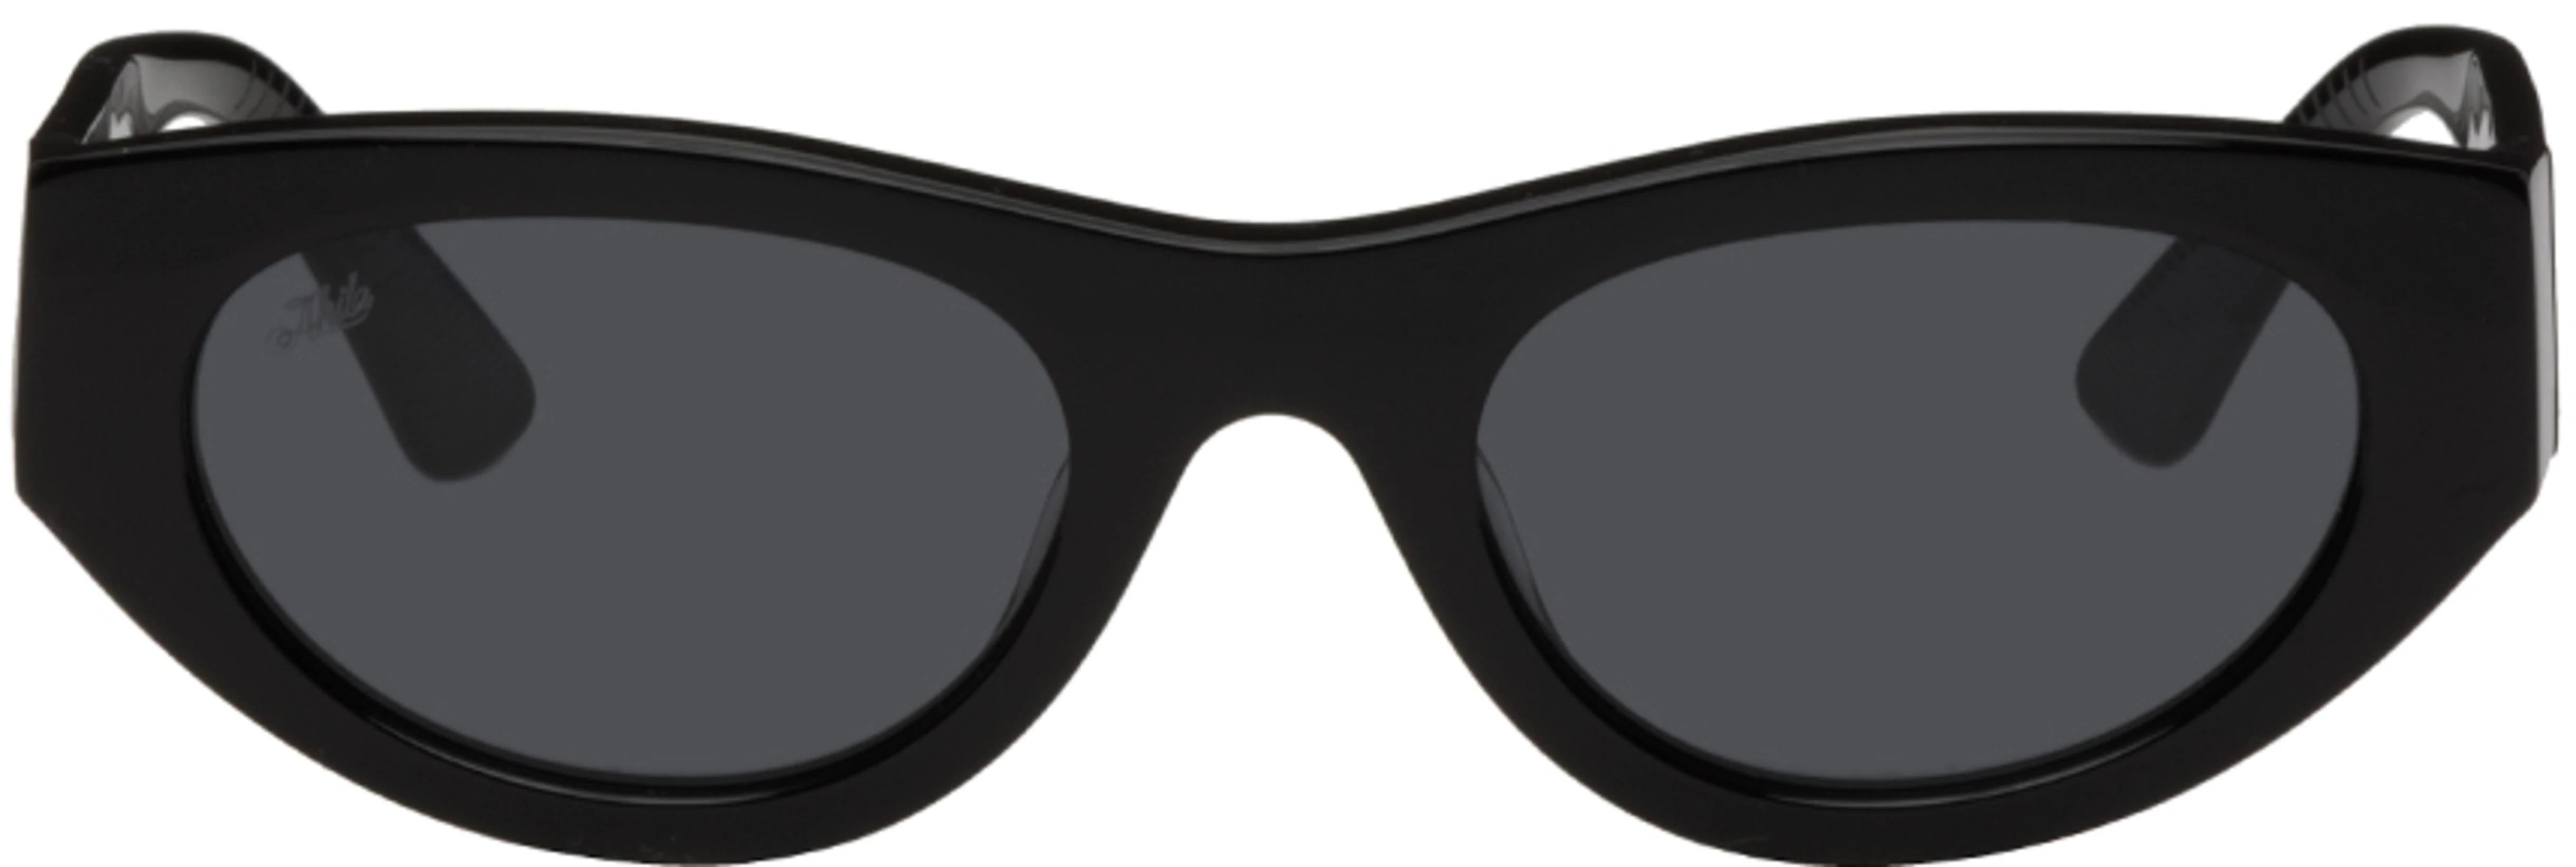 Black Vertigo Sunglasses by AKILA